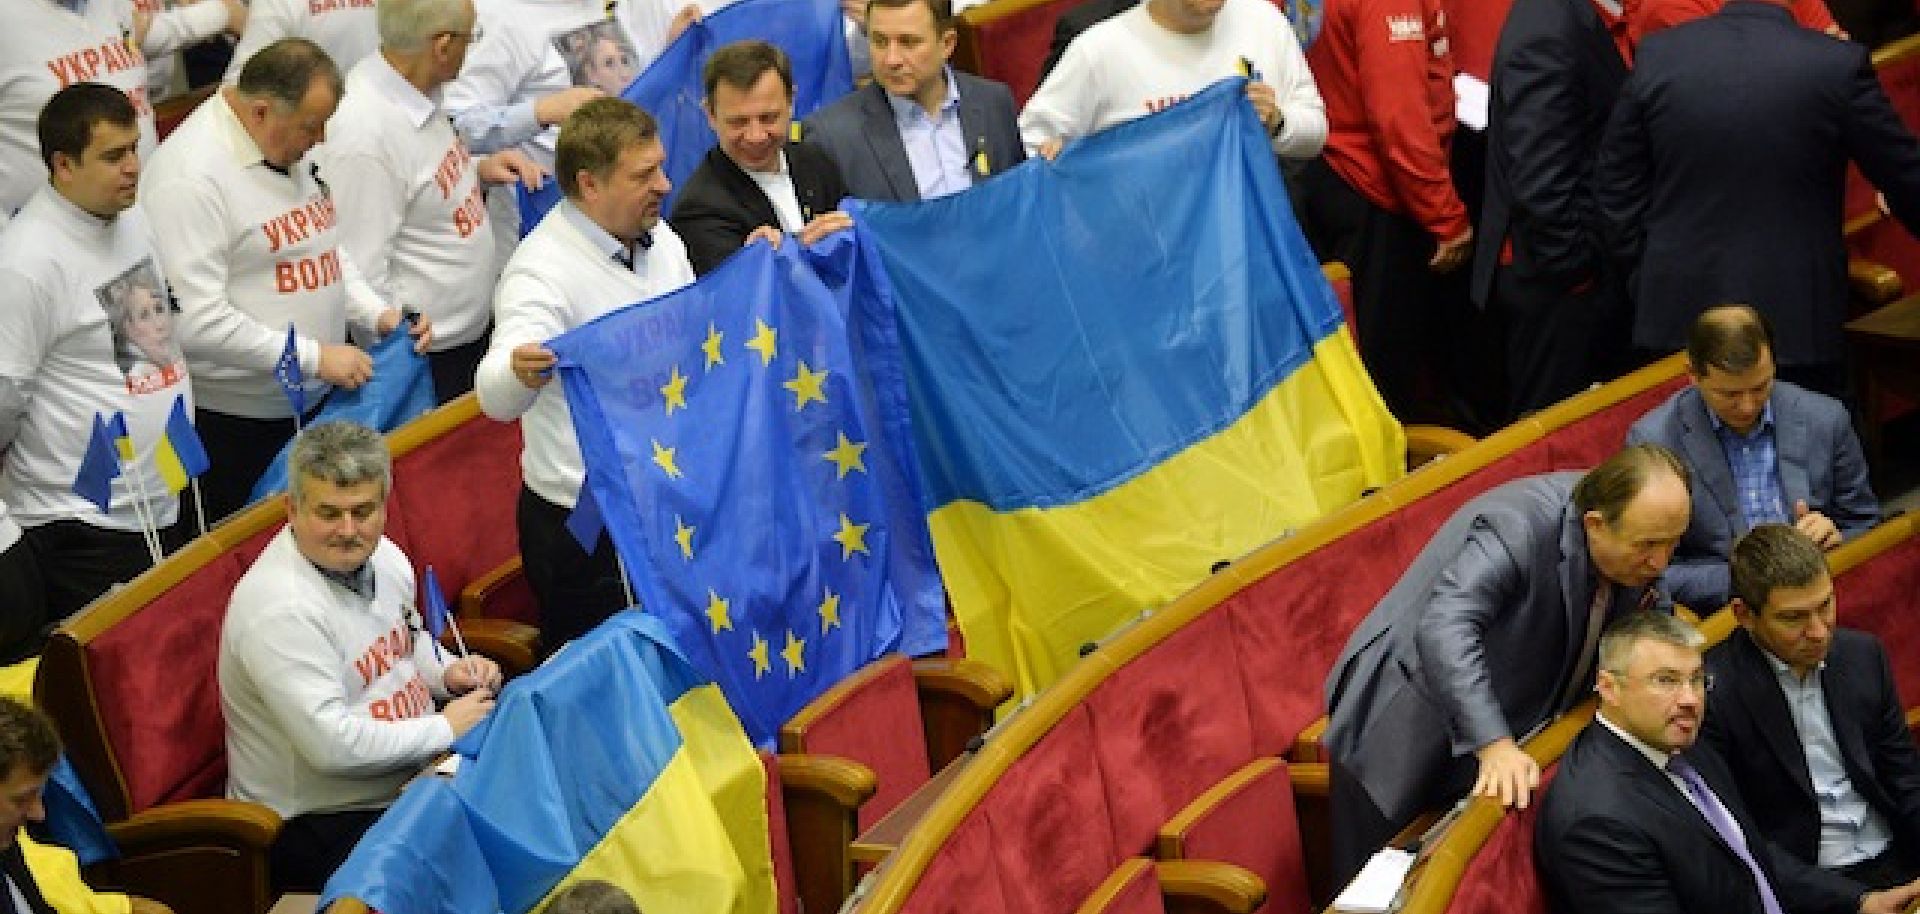 Ukraine's Balance Between the EU and Russia